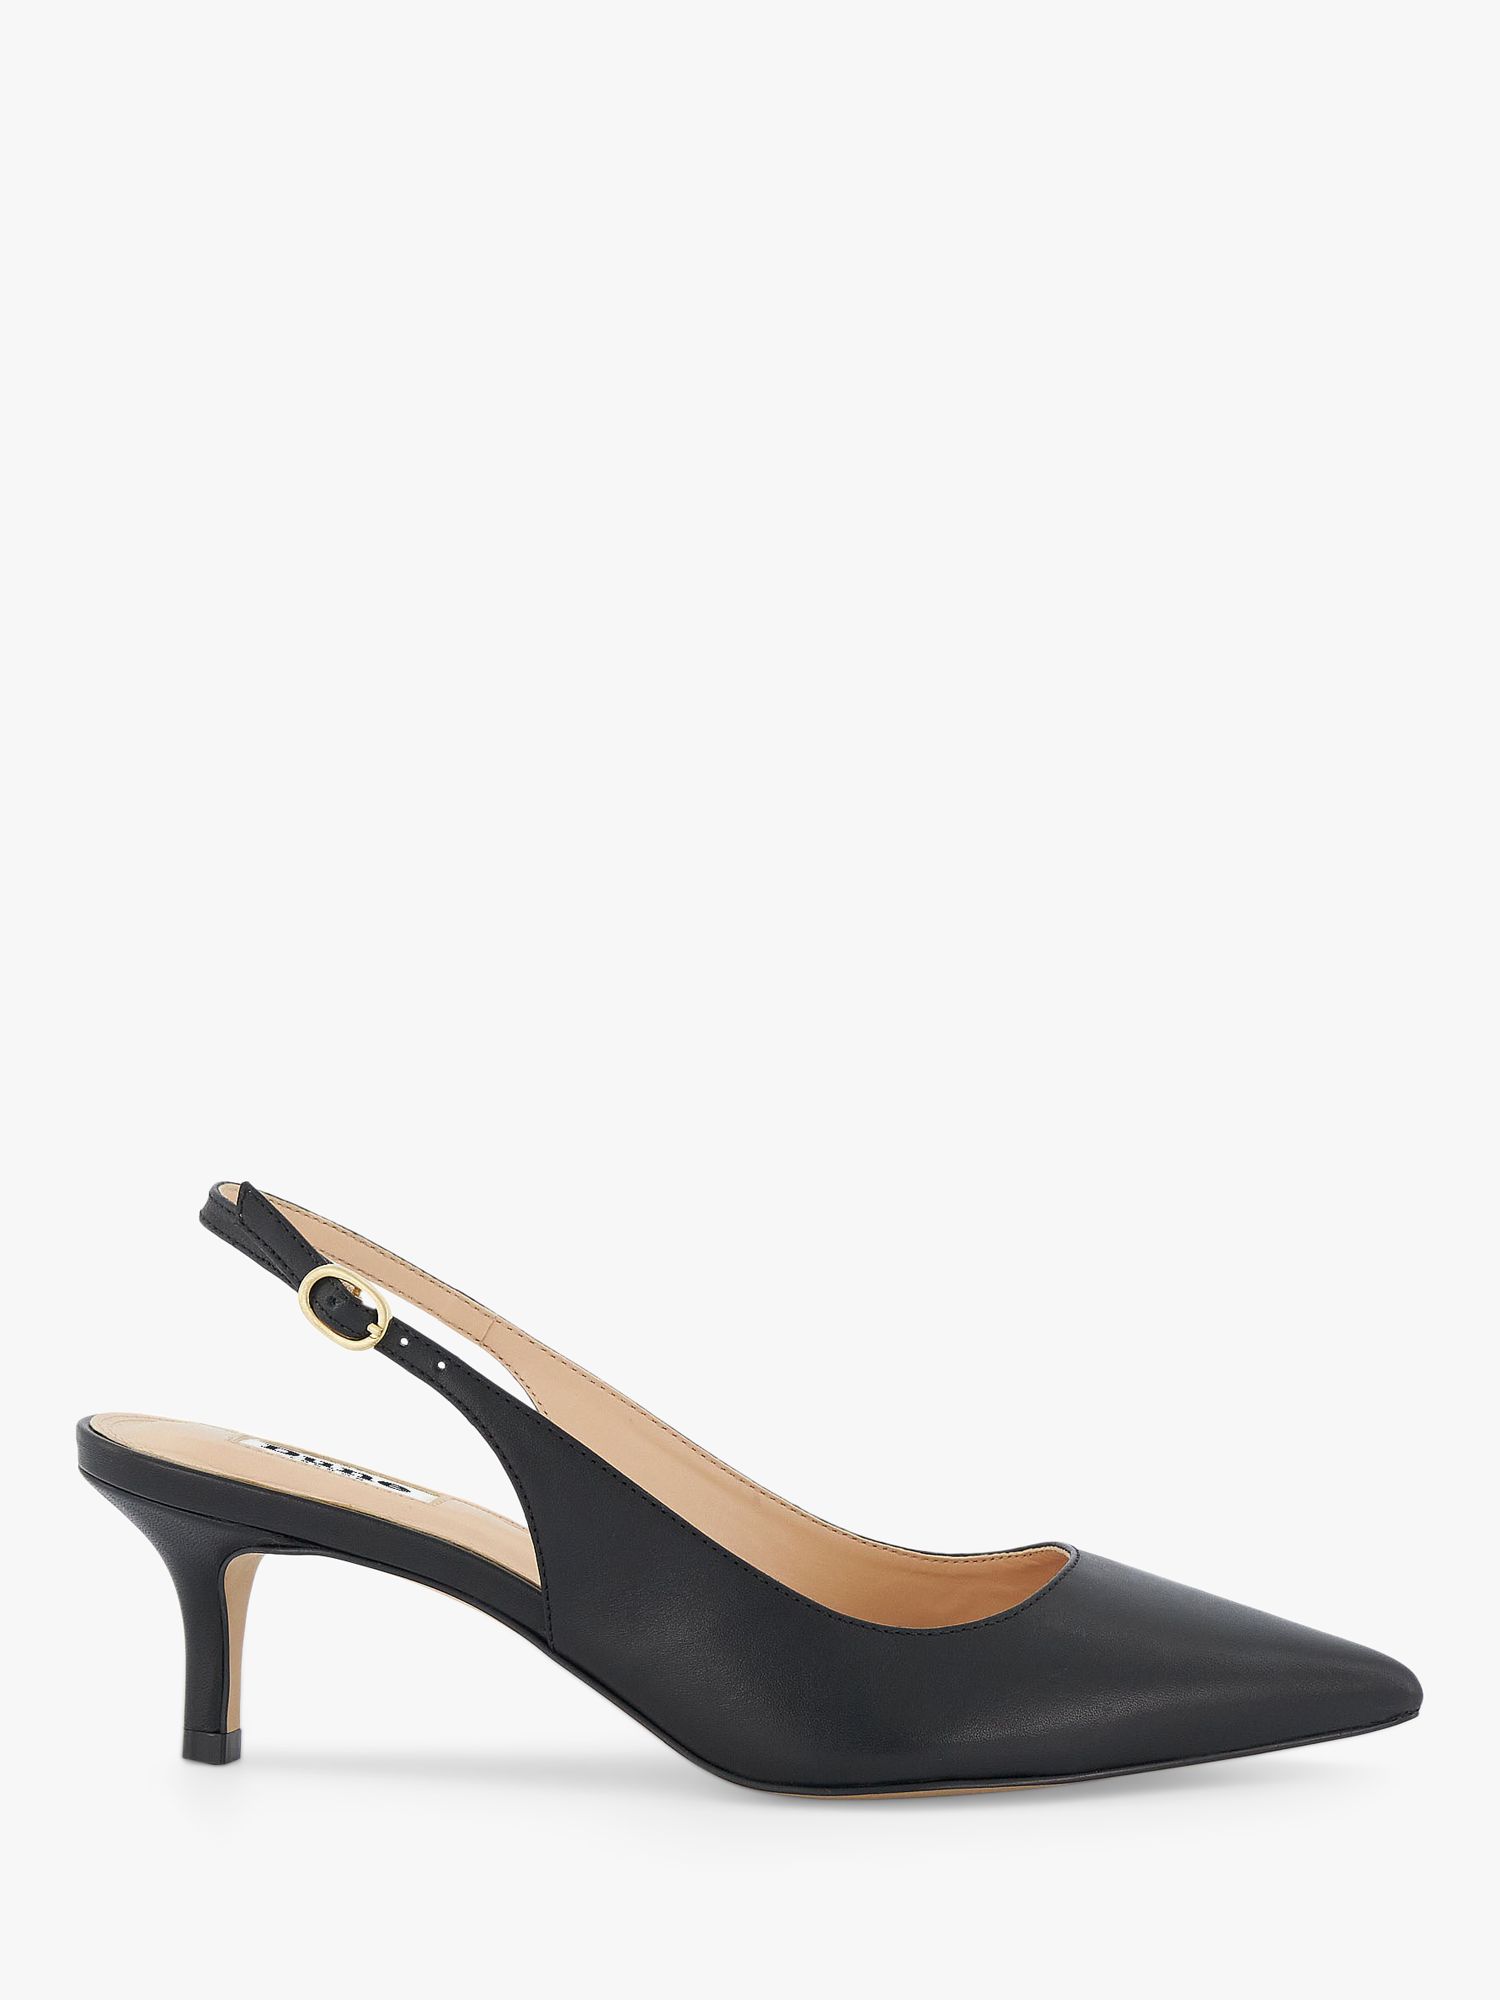 Dune Celini Leather Court Shoes, Black at John Lewis & Partners